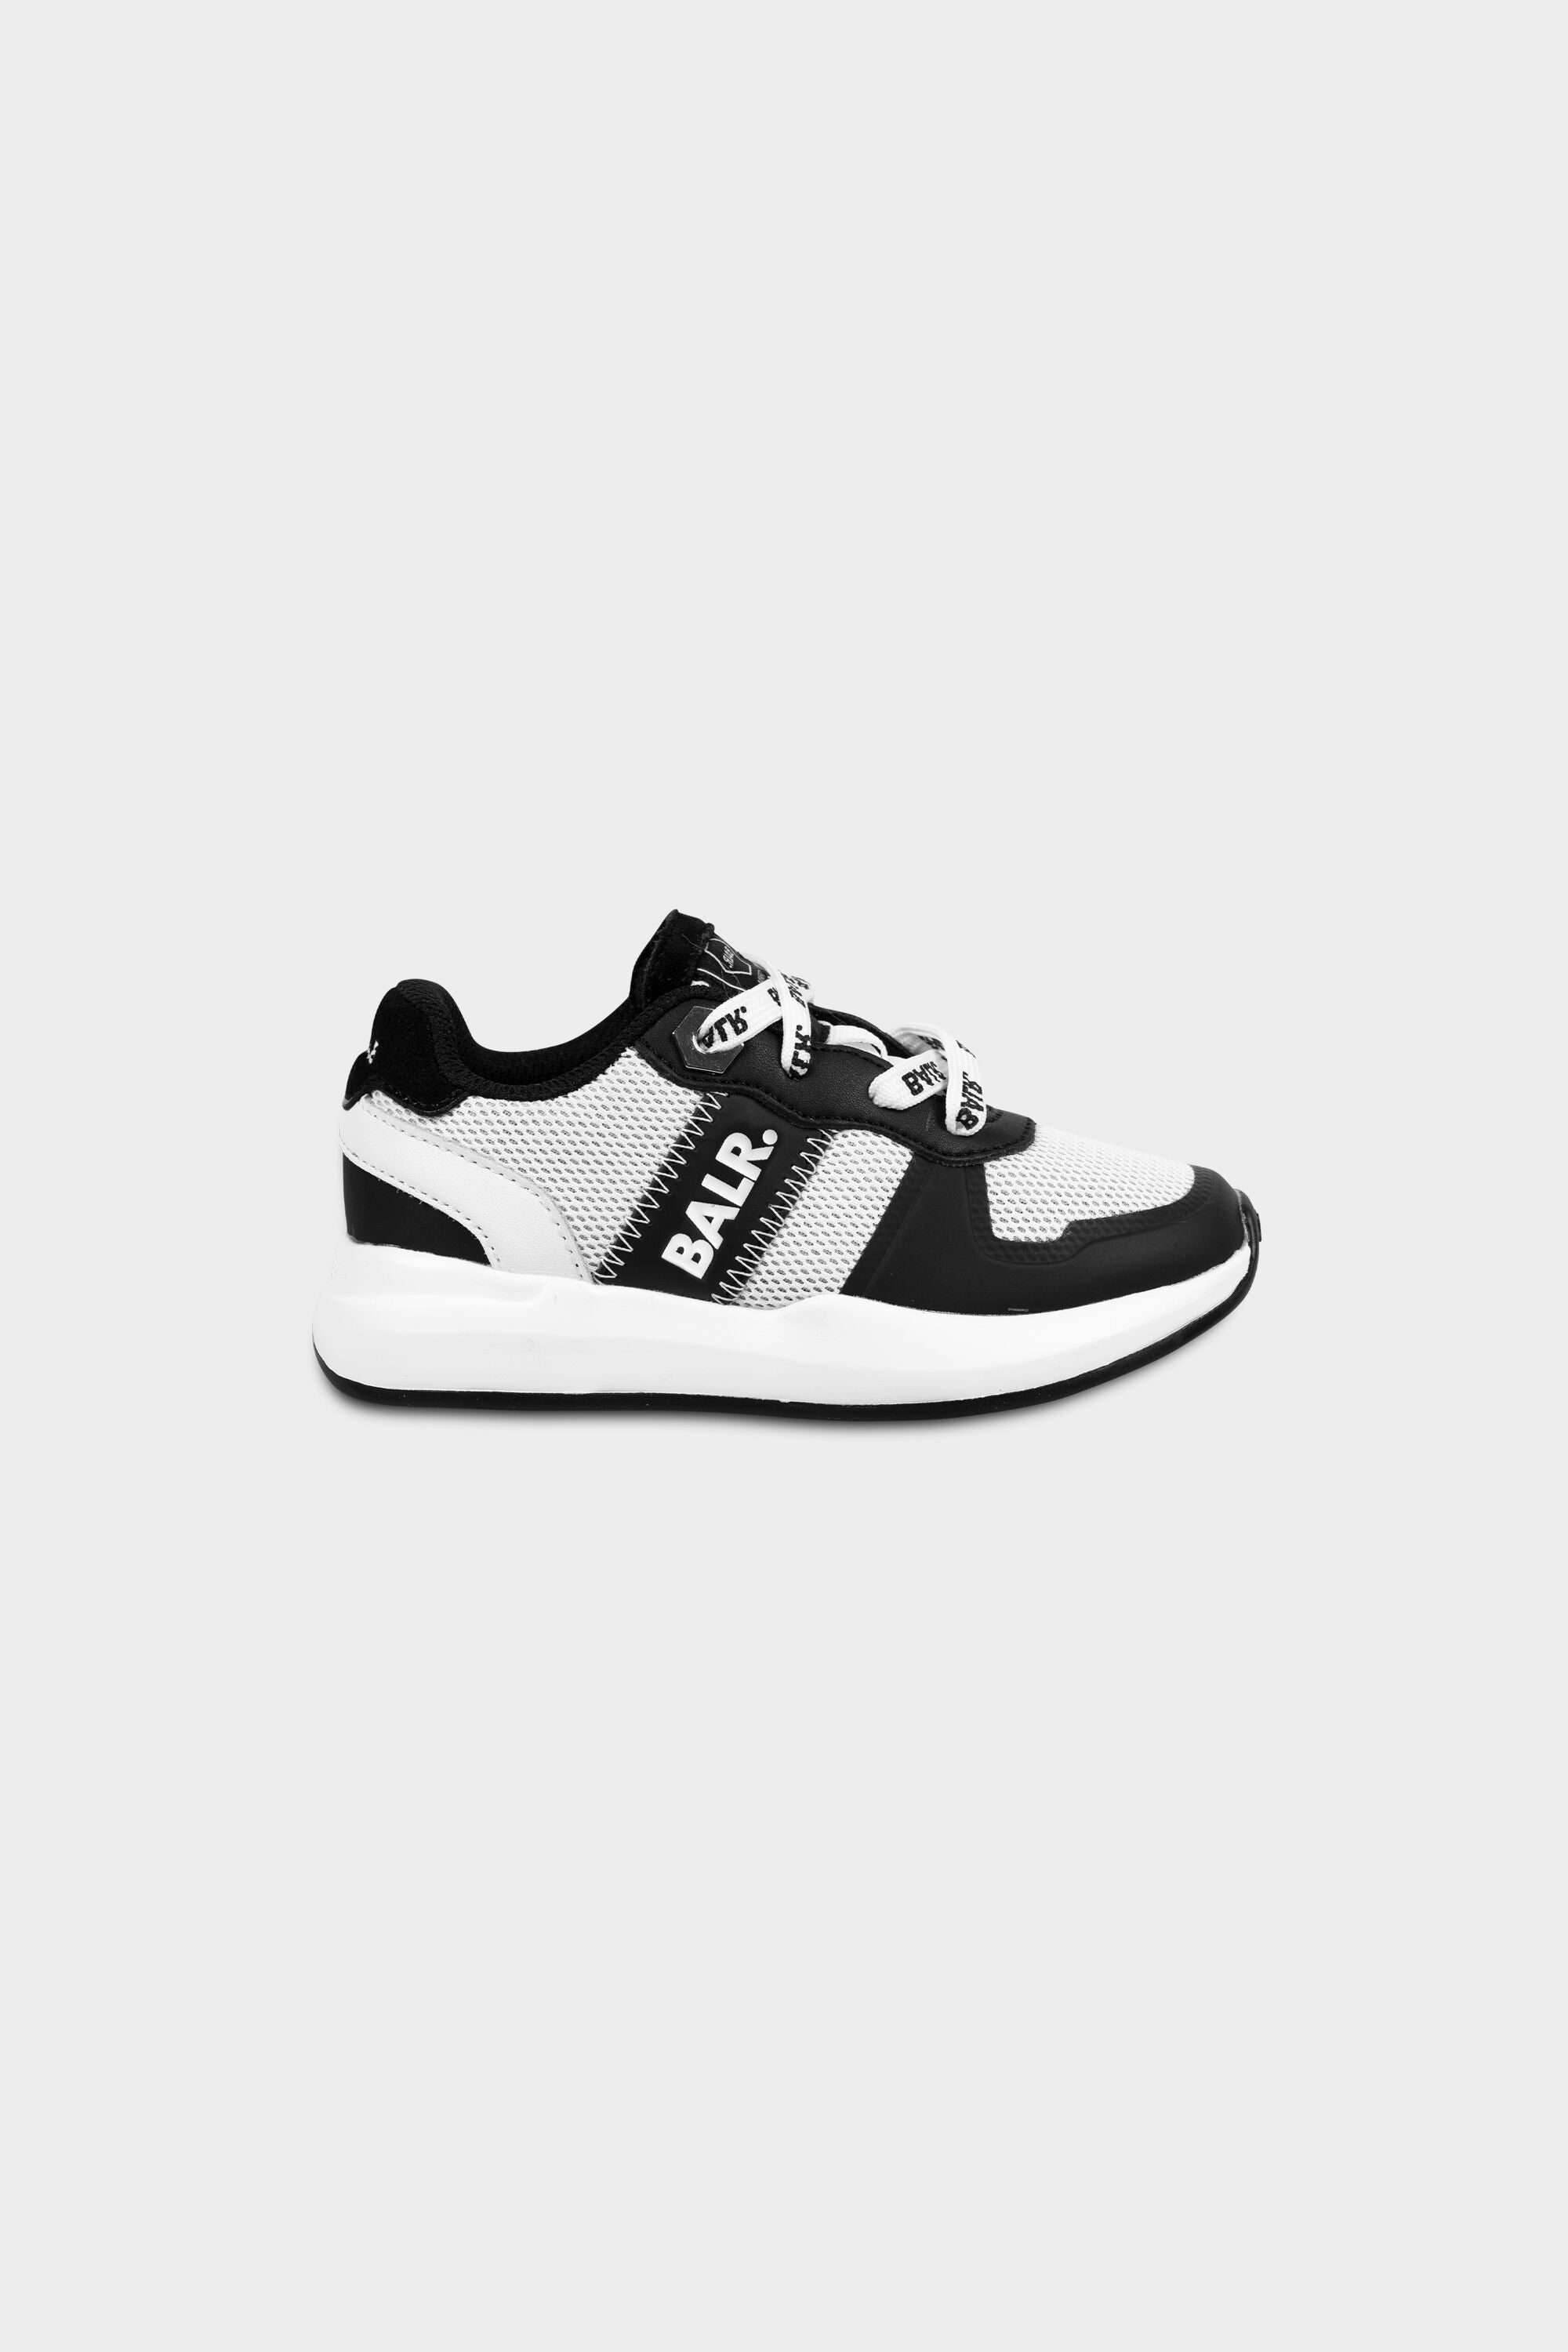 adidas x_ plr knit white & grey shoes